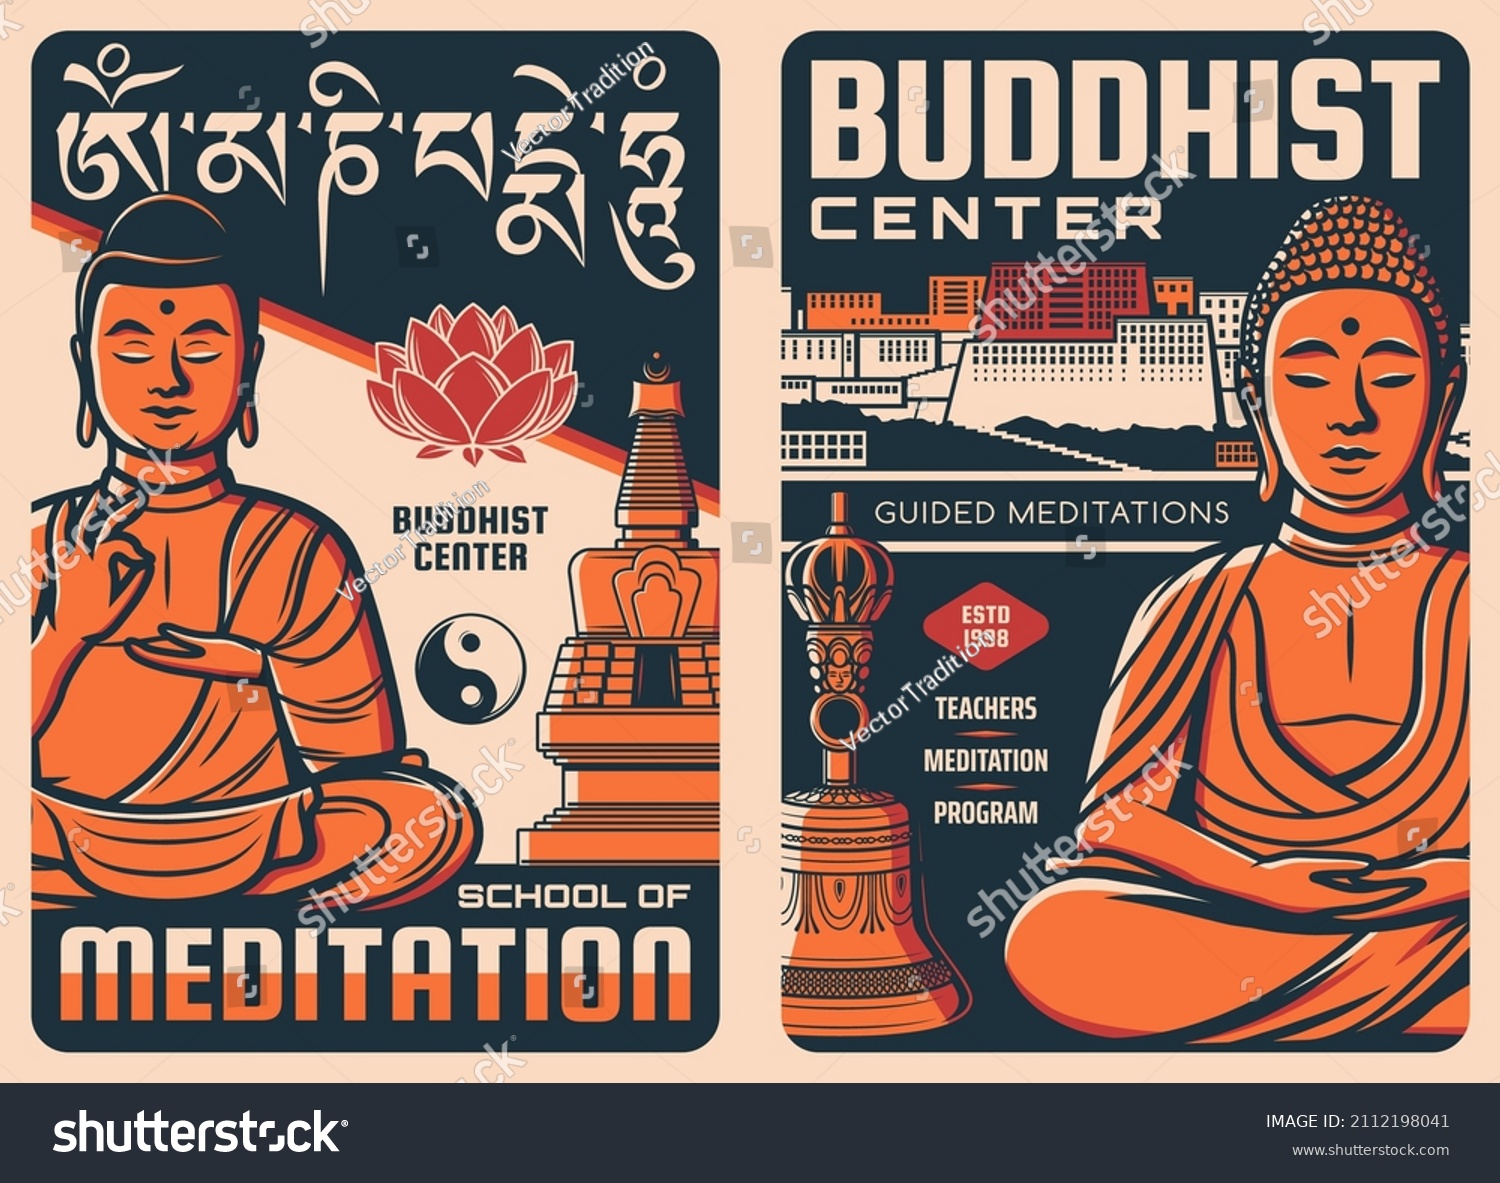 Buddhist center retro posters. Buddhism religion Royalty Free Stock